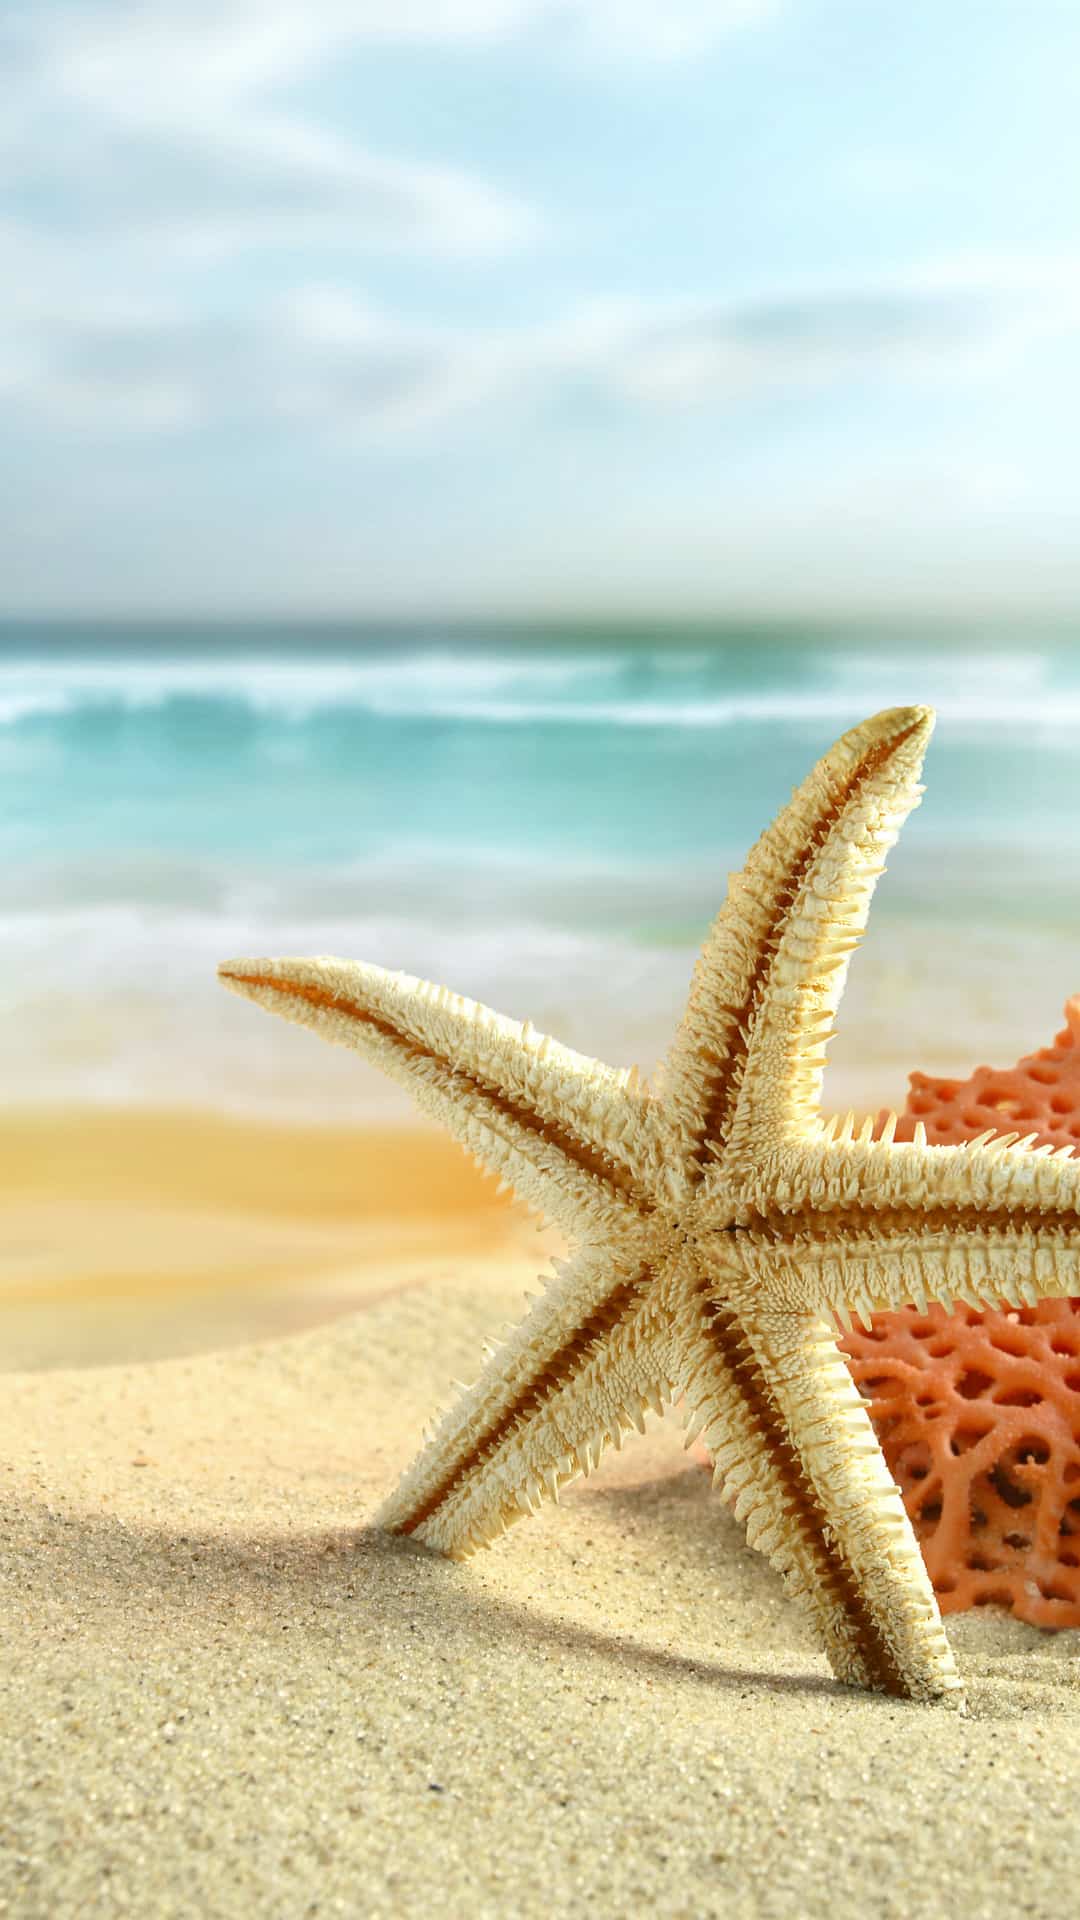 Sea Star Summer Beach Android Wallpaper